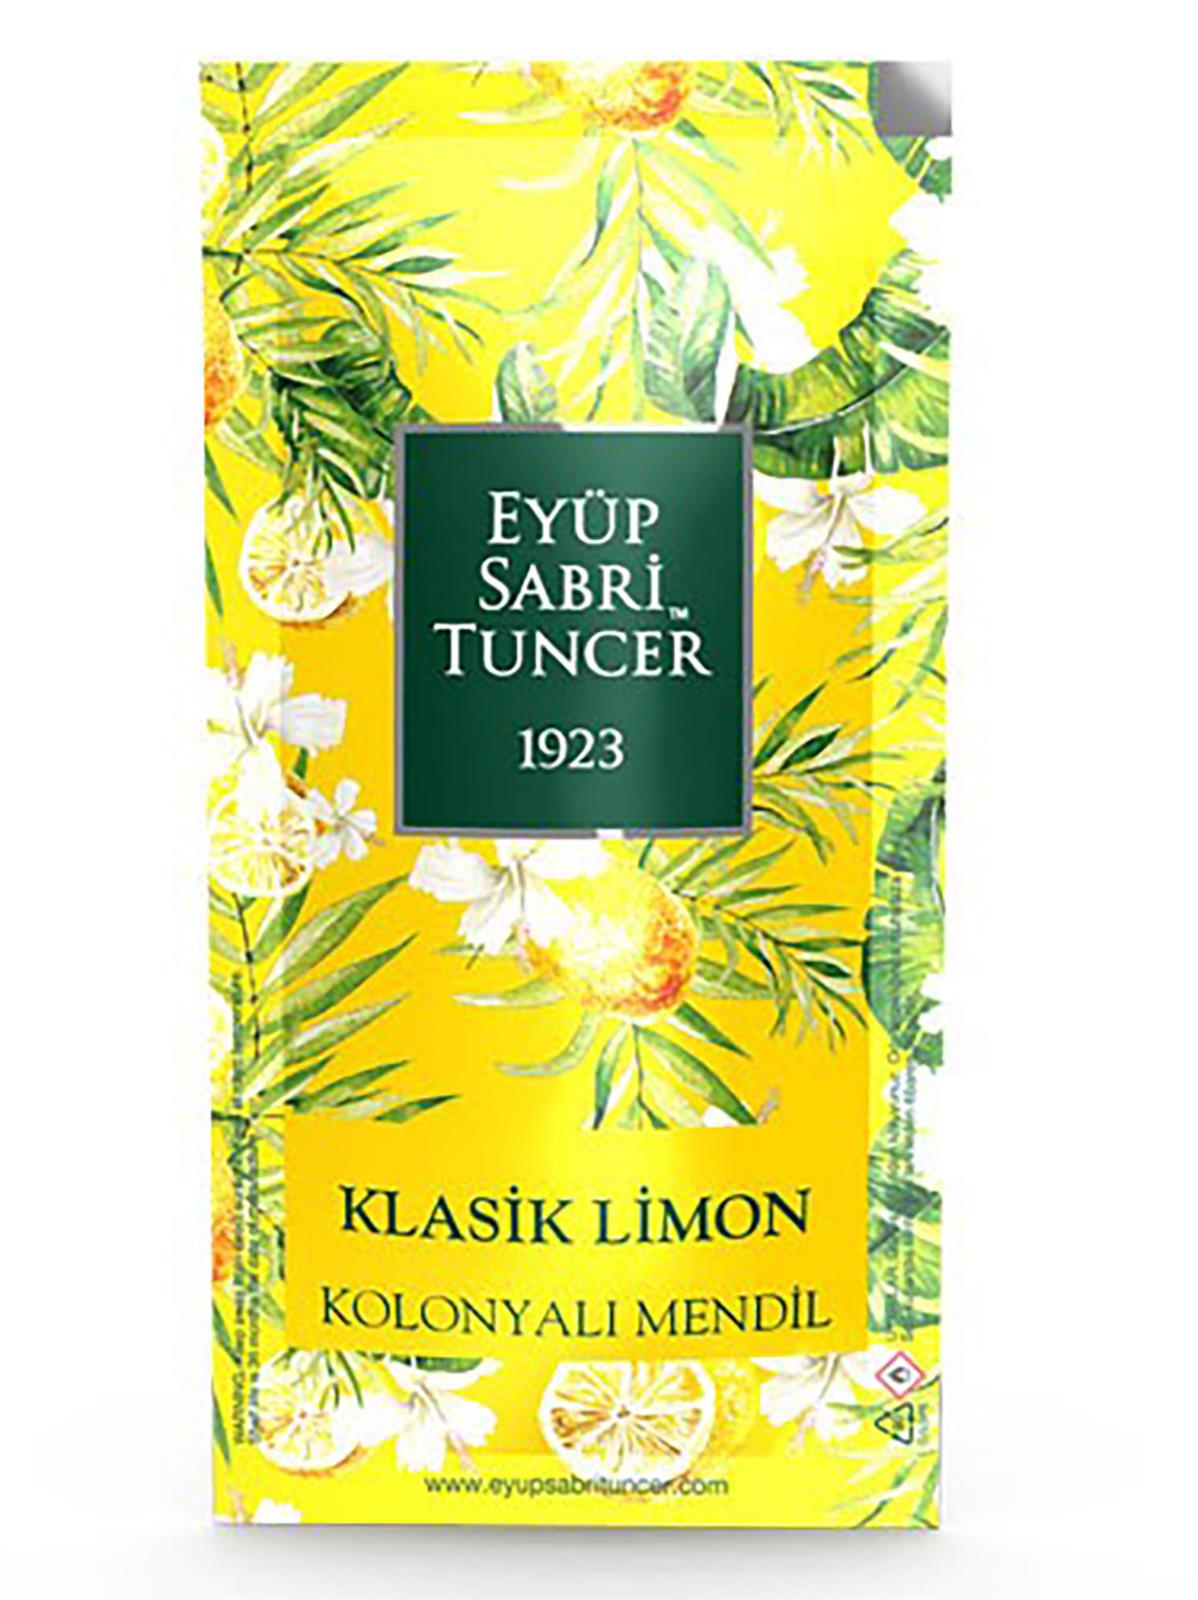 Eyüp Sabri Tuncer Klasik Limon Kolonyalı Mendil Küçük Boy 150'li